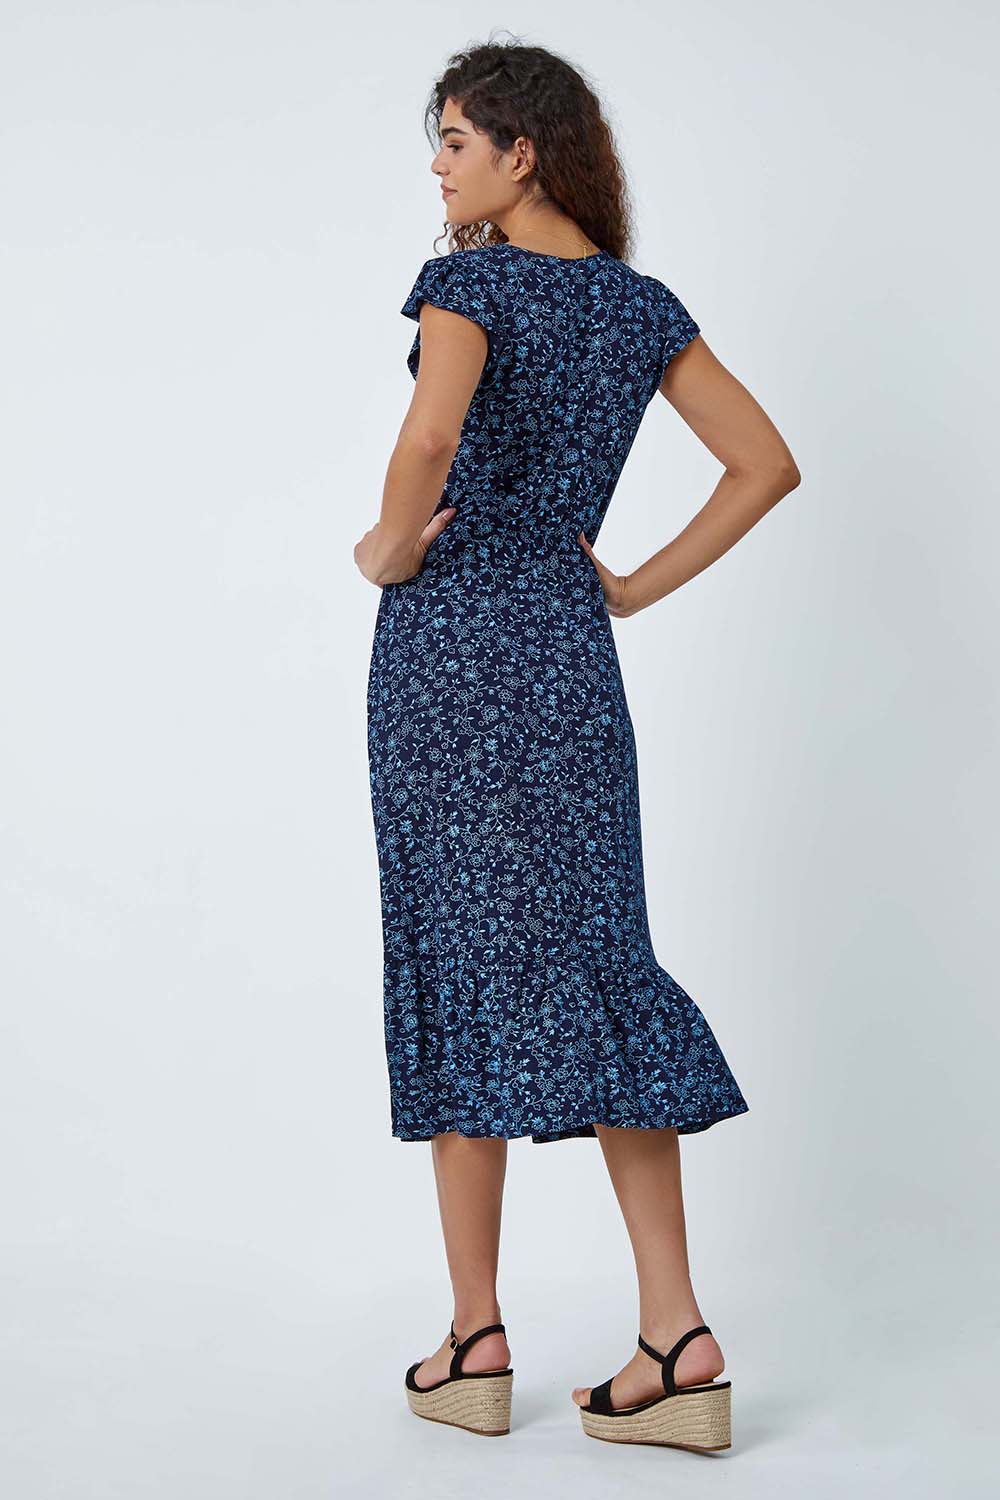 Blue Floral Print Frill Midi Stretch Dress, Image 3 of 5